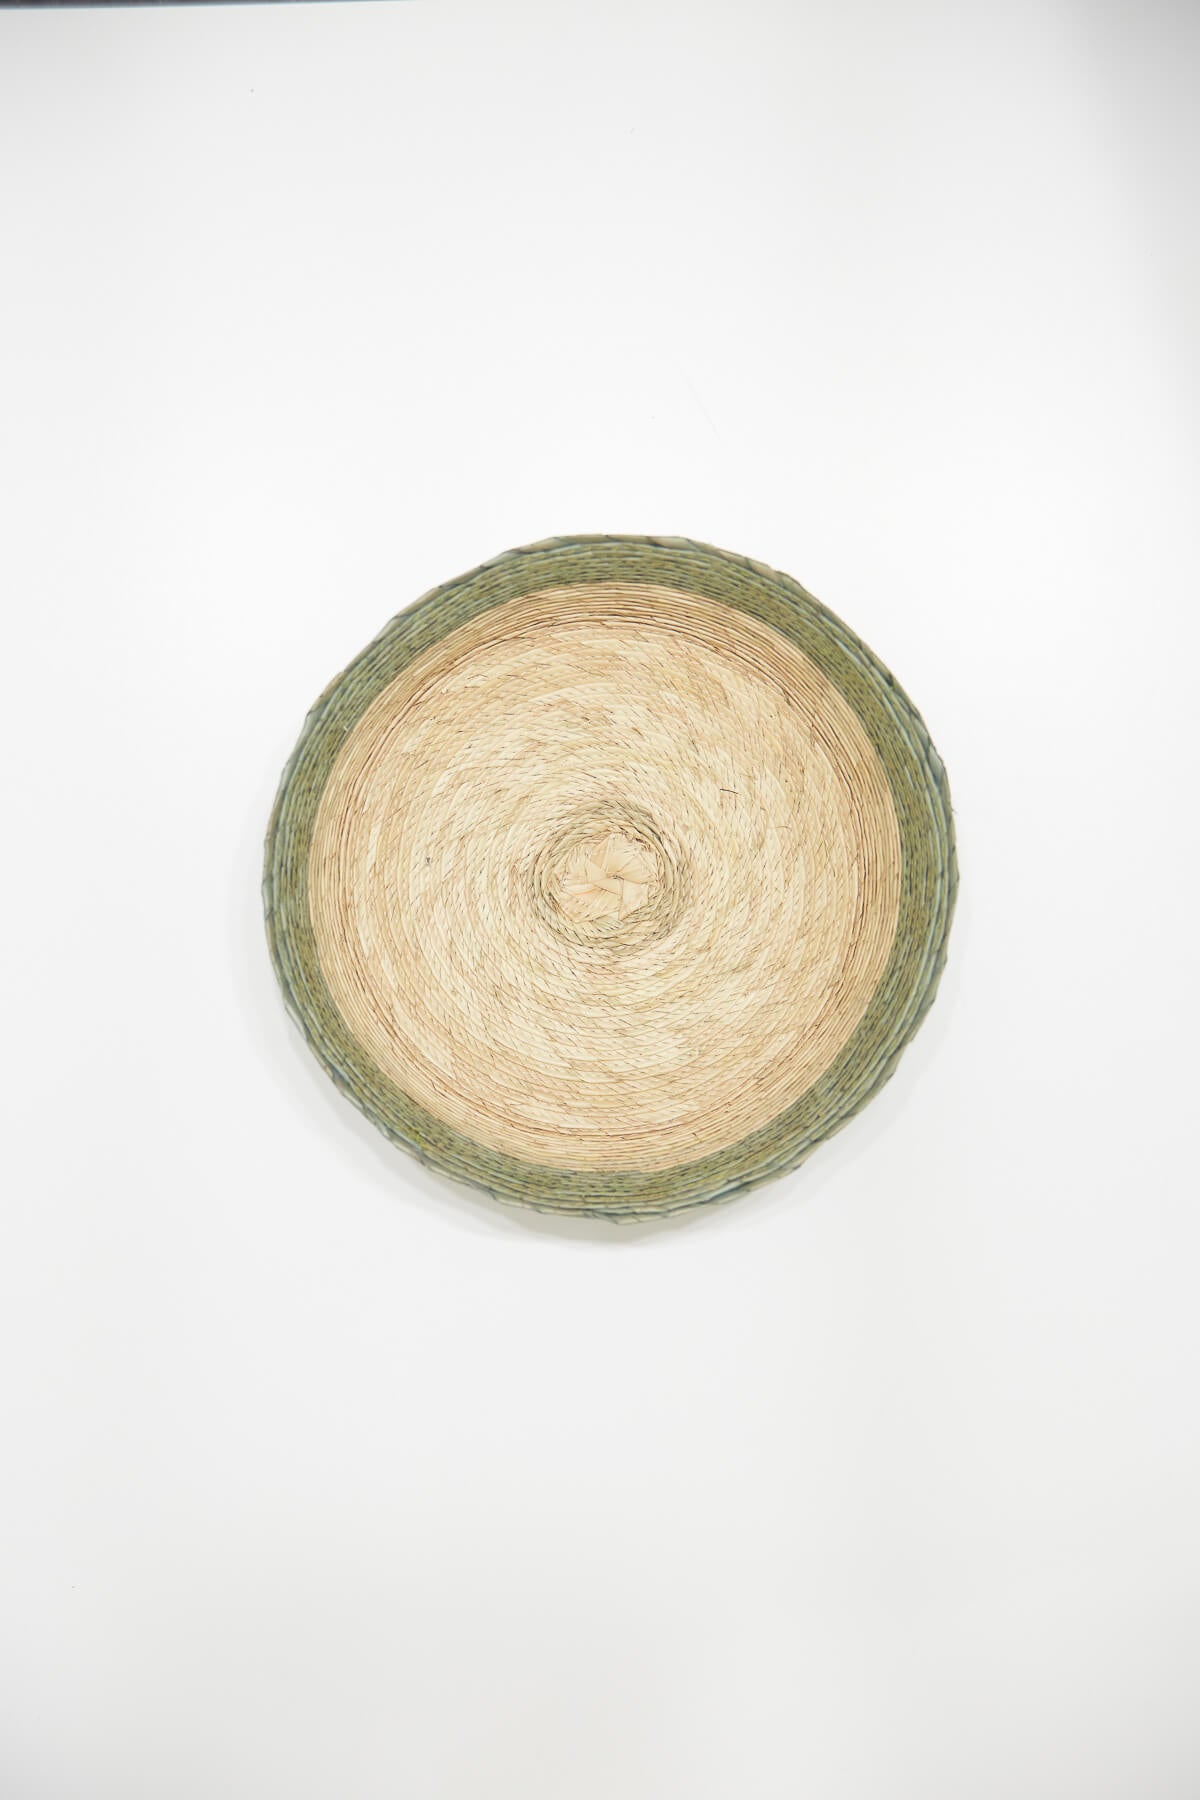 Makaua Medium Round Basket